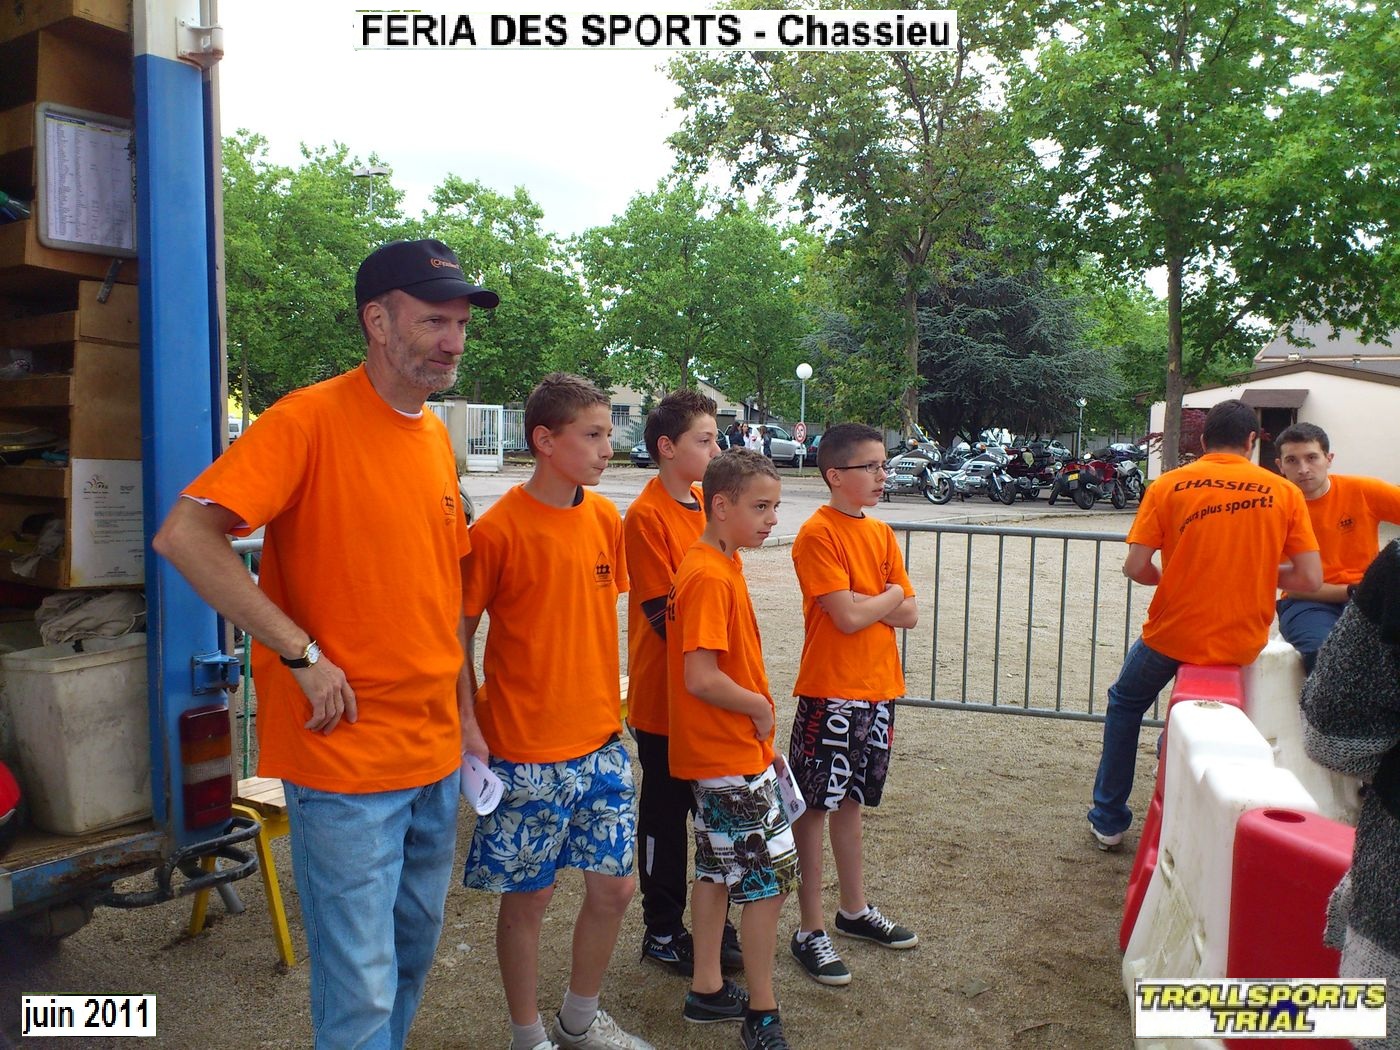 feria-sports/img/2011 06 feria sport chassieu 52.jpg